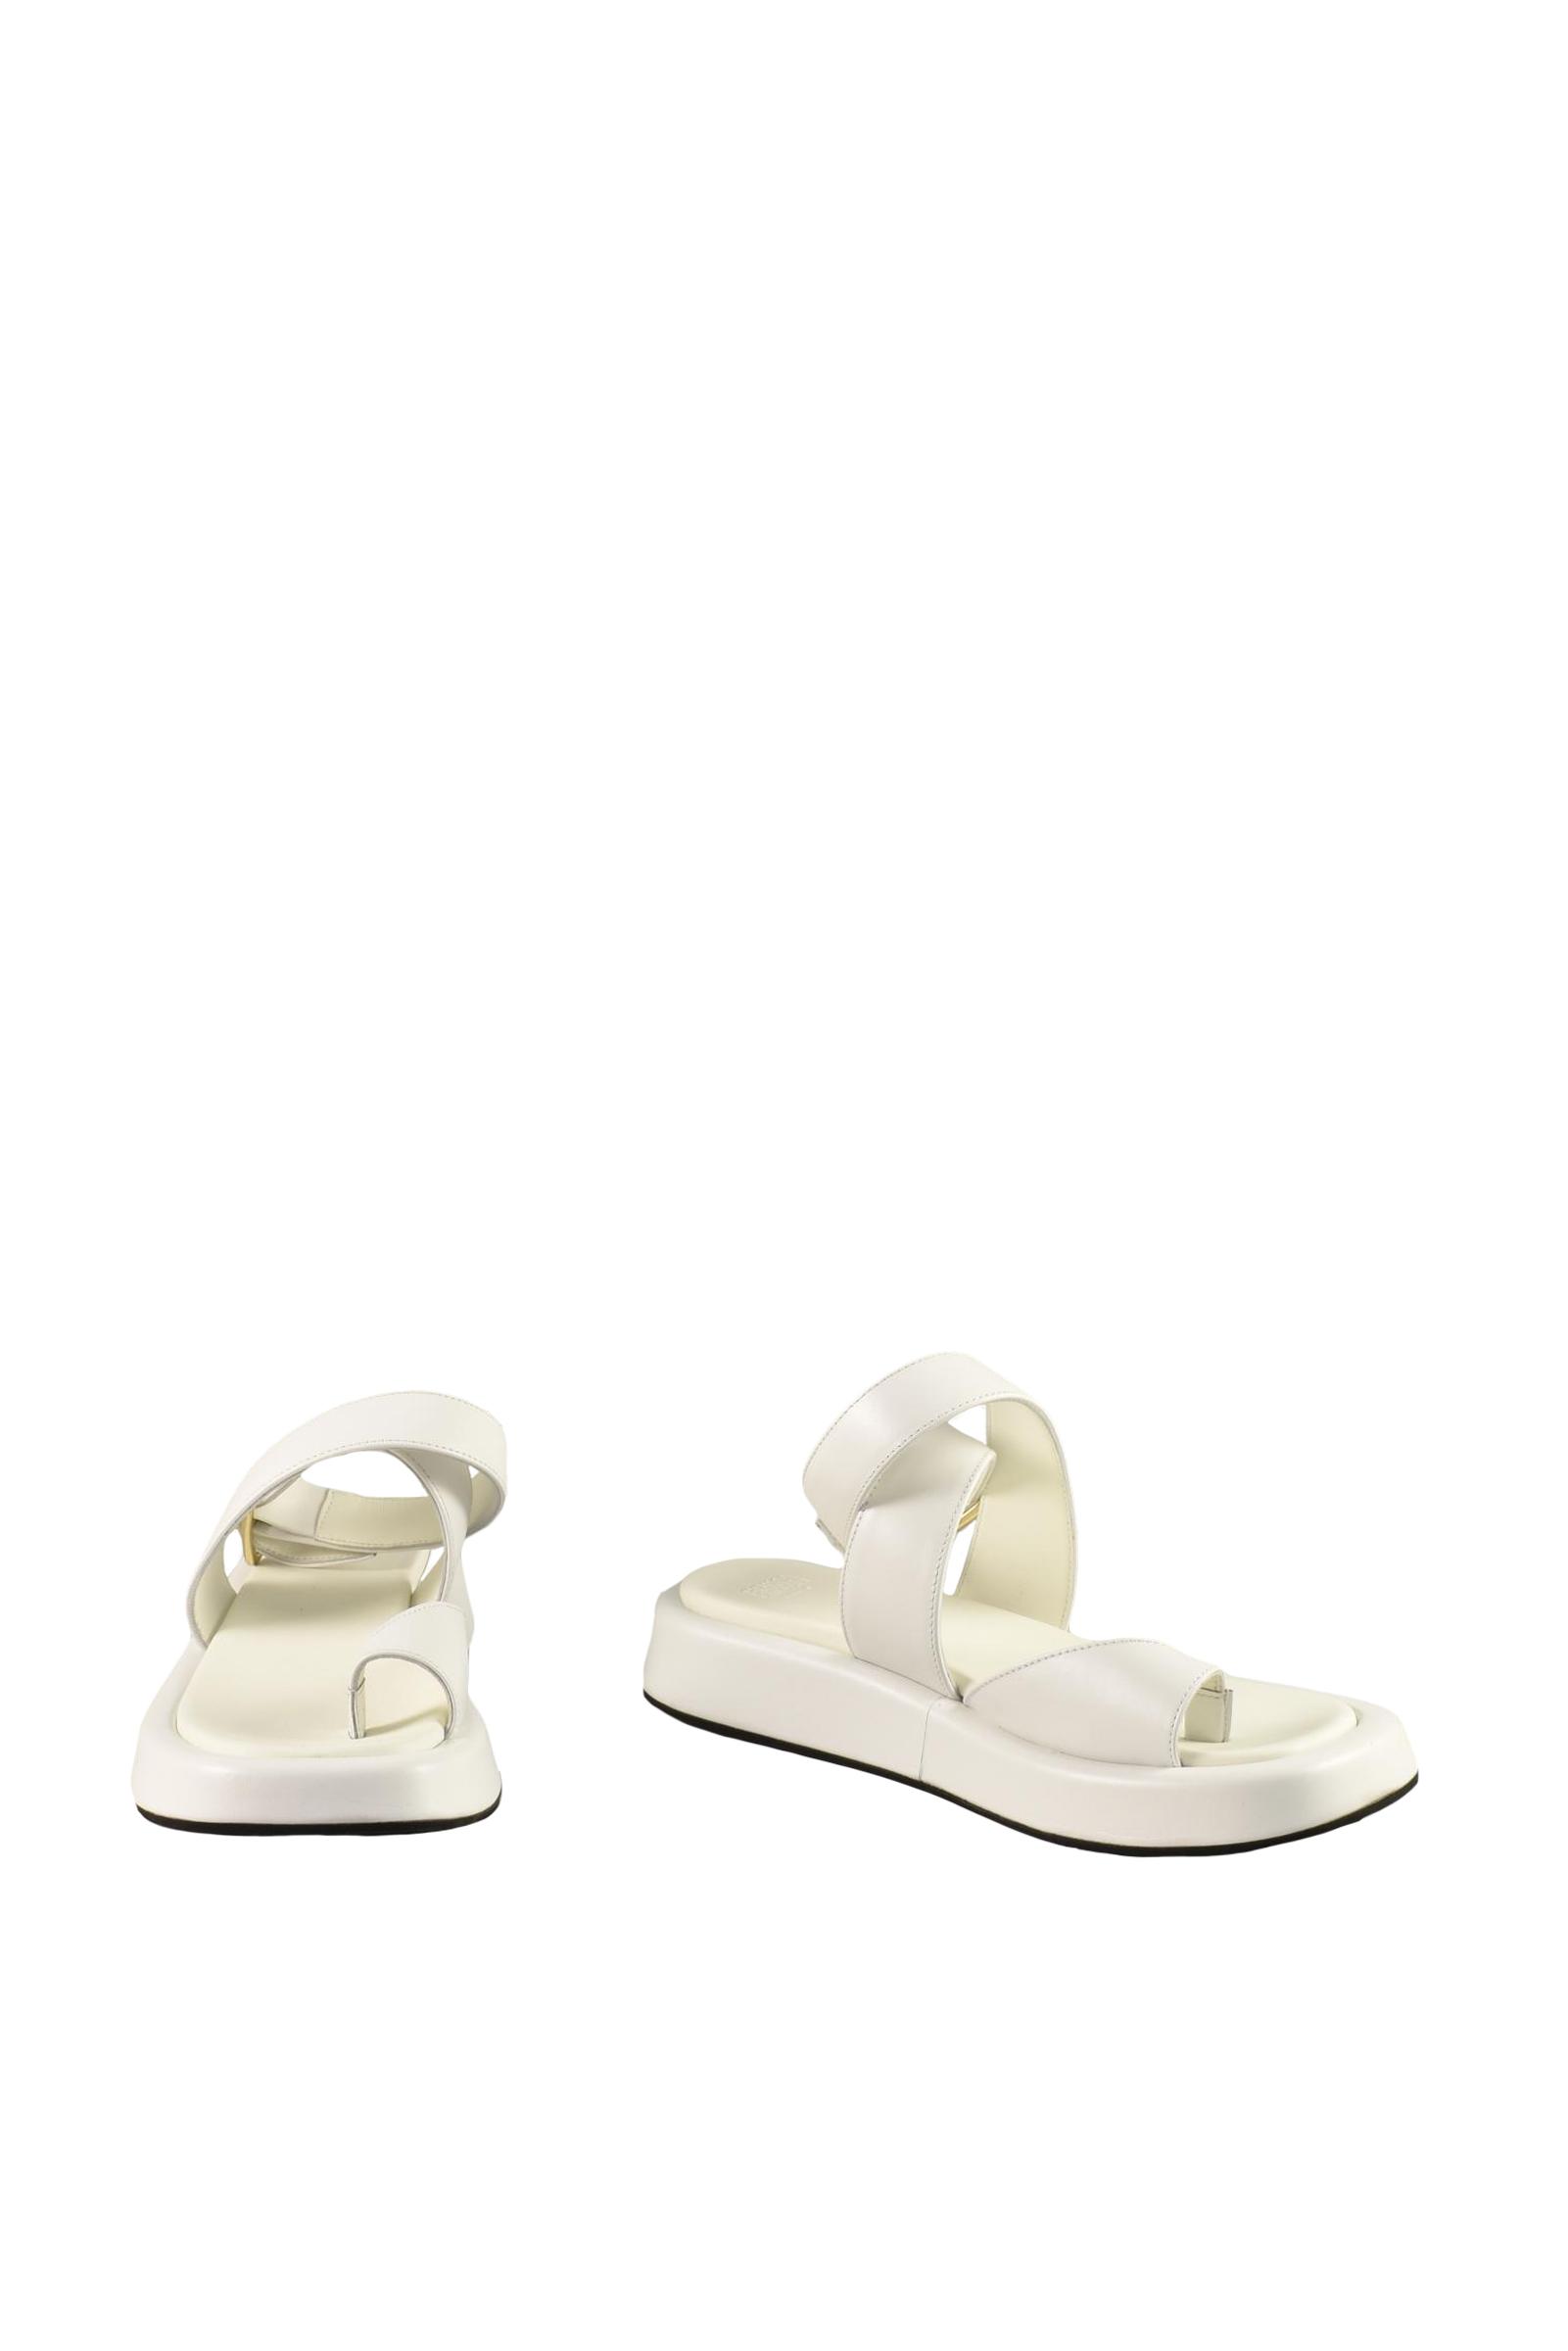 Erika Cavallini Women's White Sandals